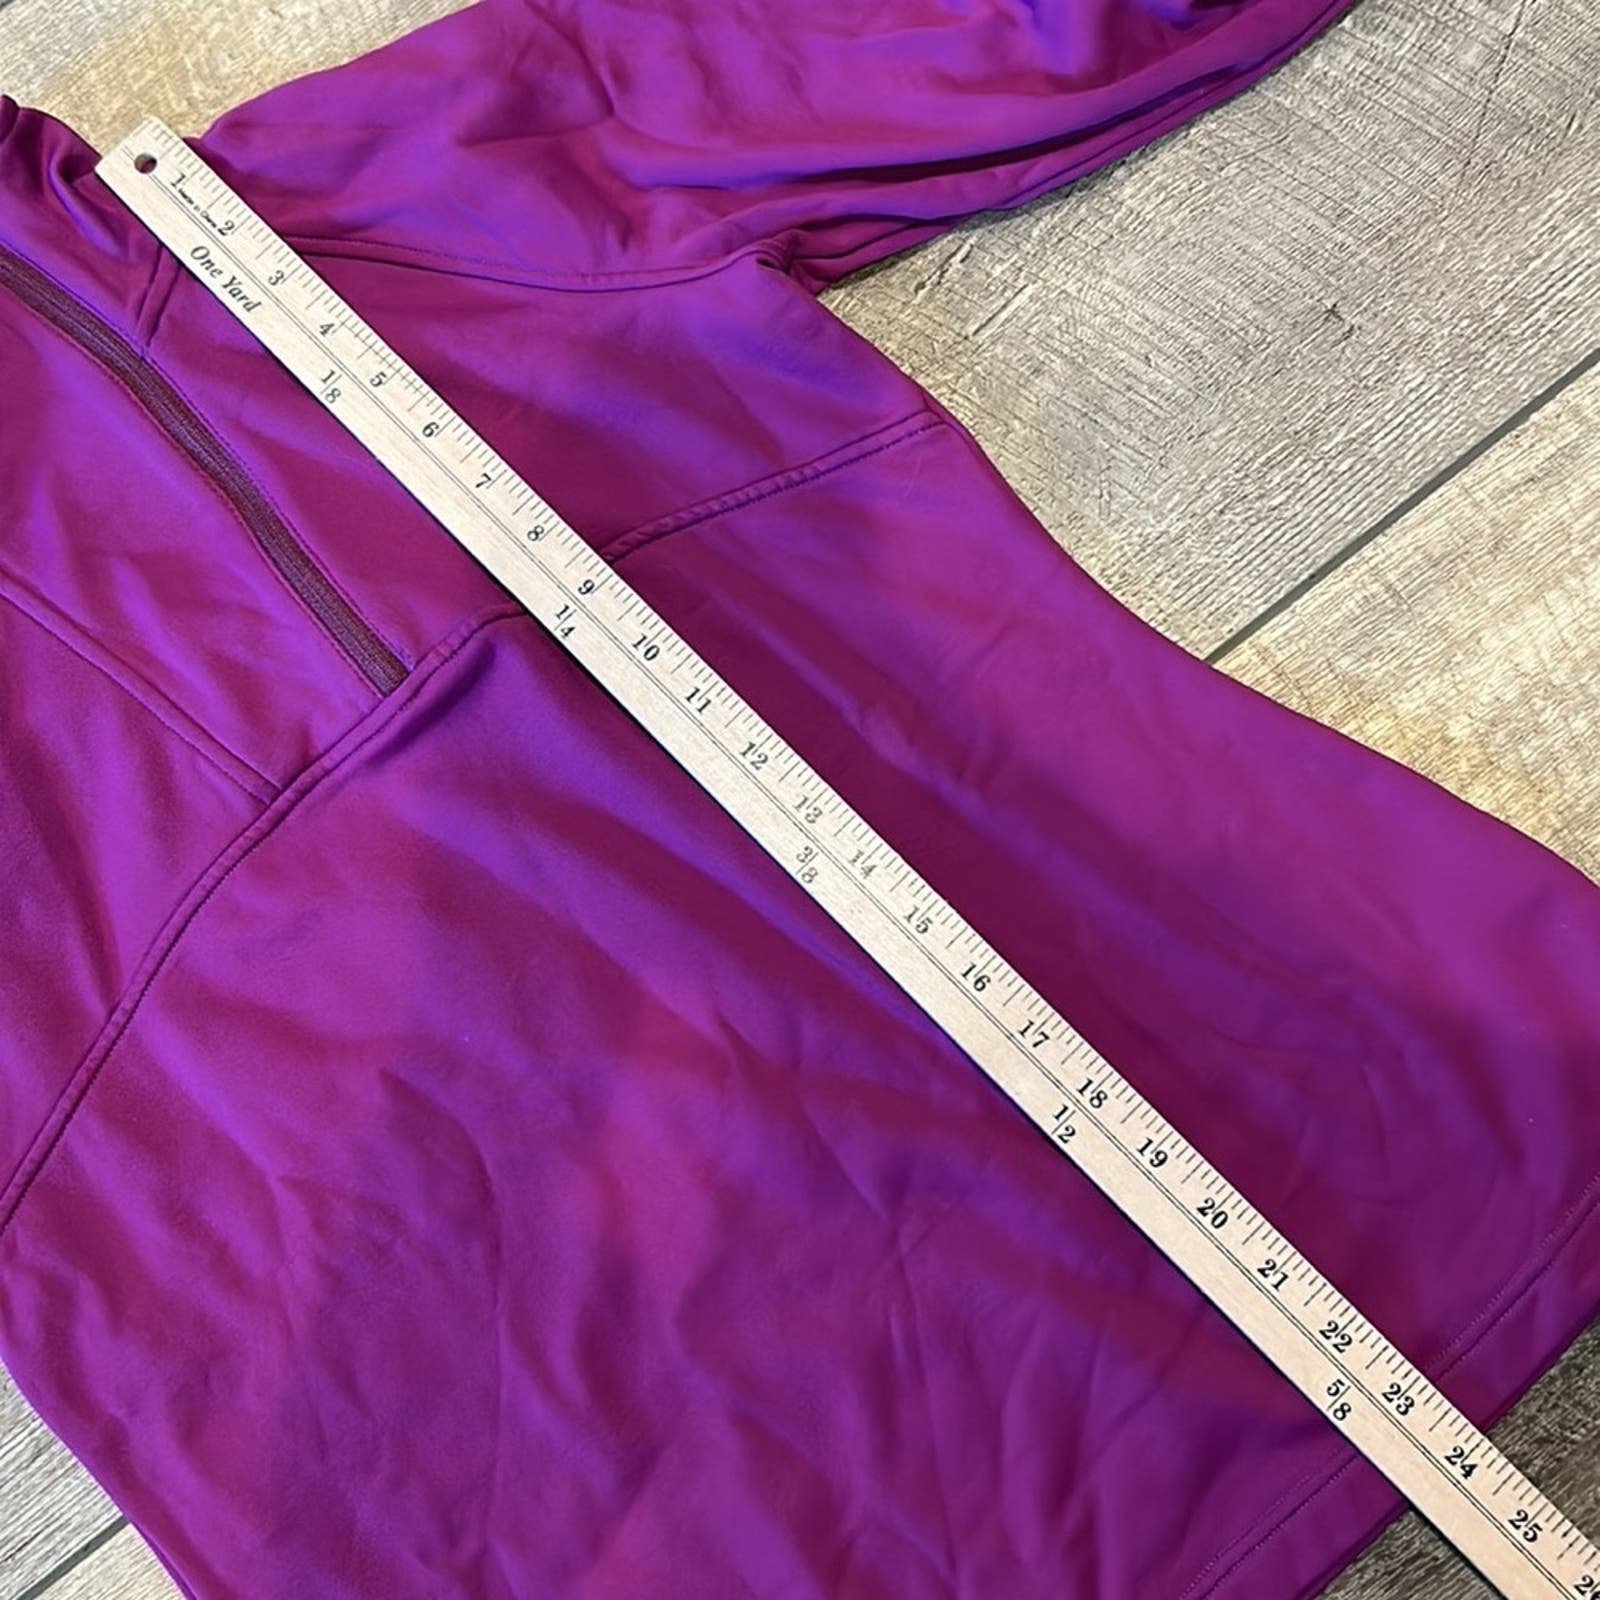 Elegant Title Nine Asymmetrical Quarter Zip Purple Fleece Size M gjJ47VU1s online store